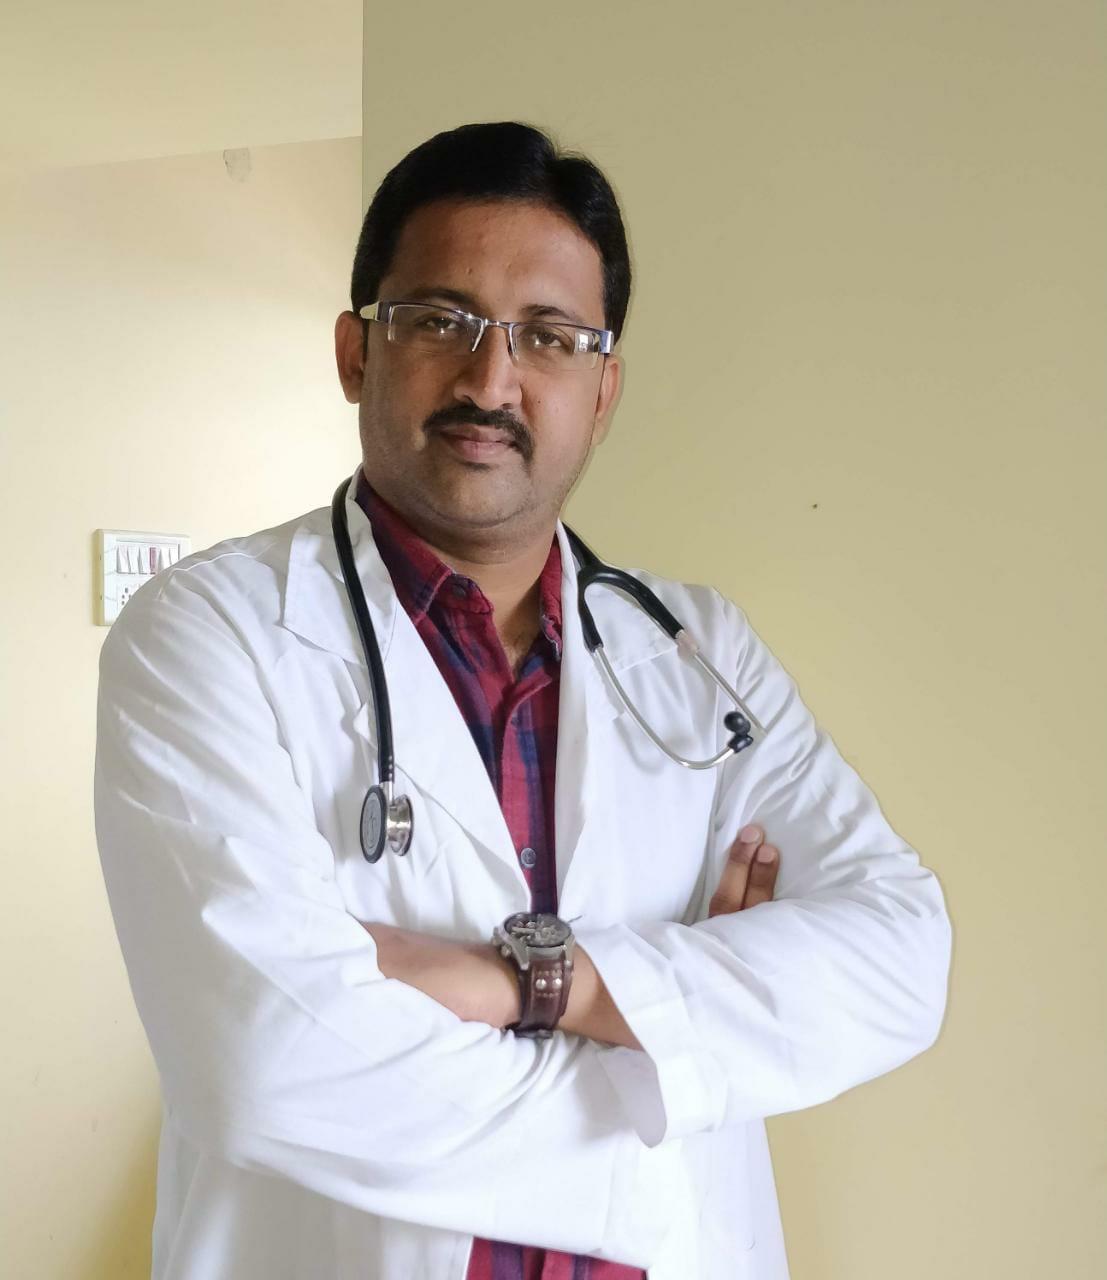 Dr. Madabathula Sunil